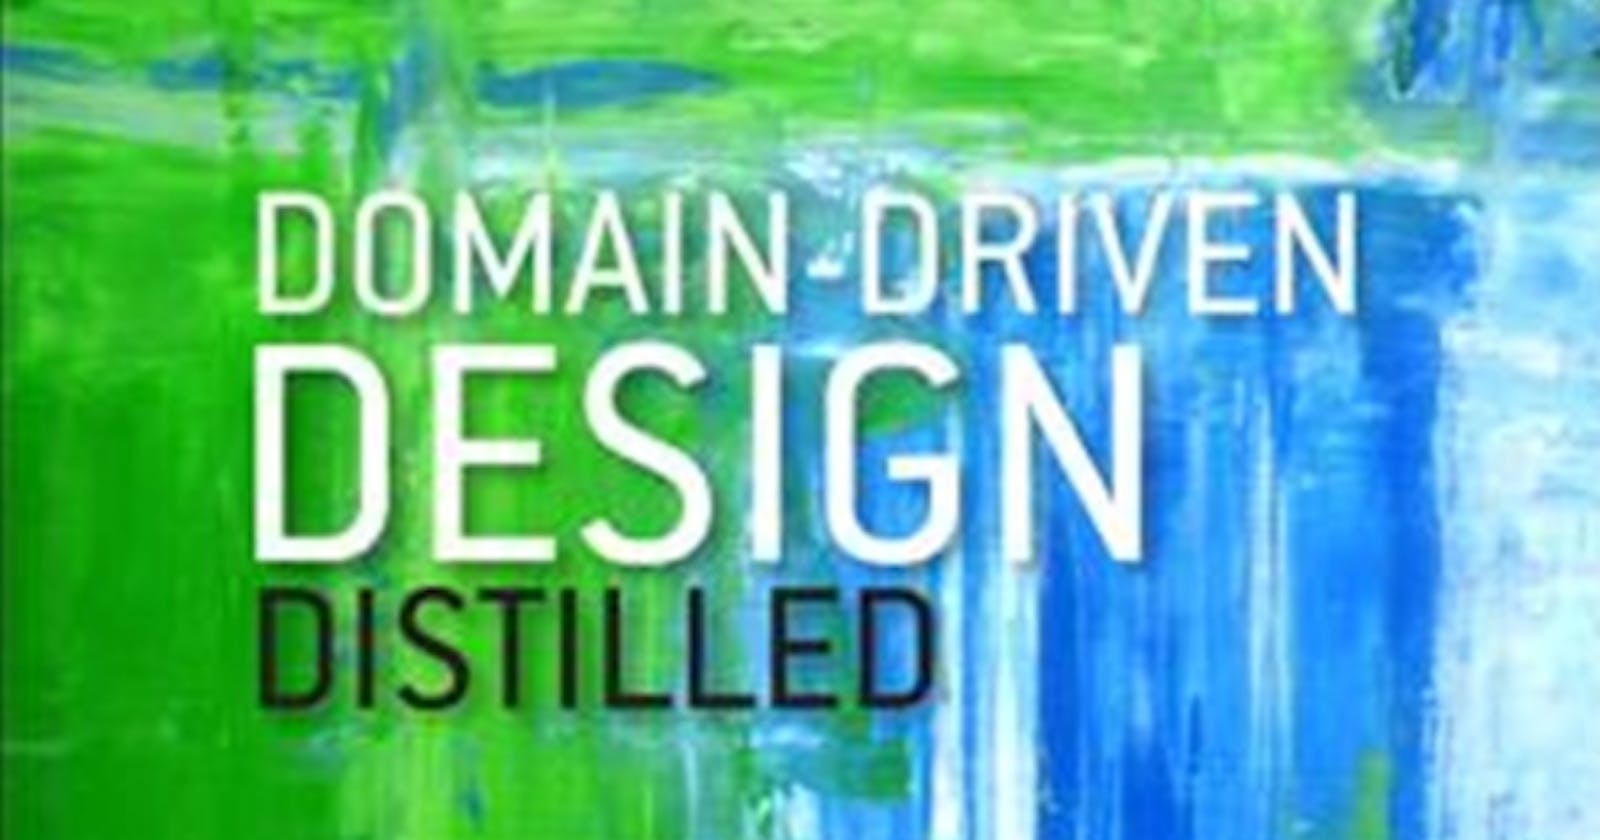 Last read: Domain-Driven Design Distilled